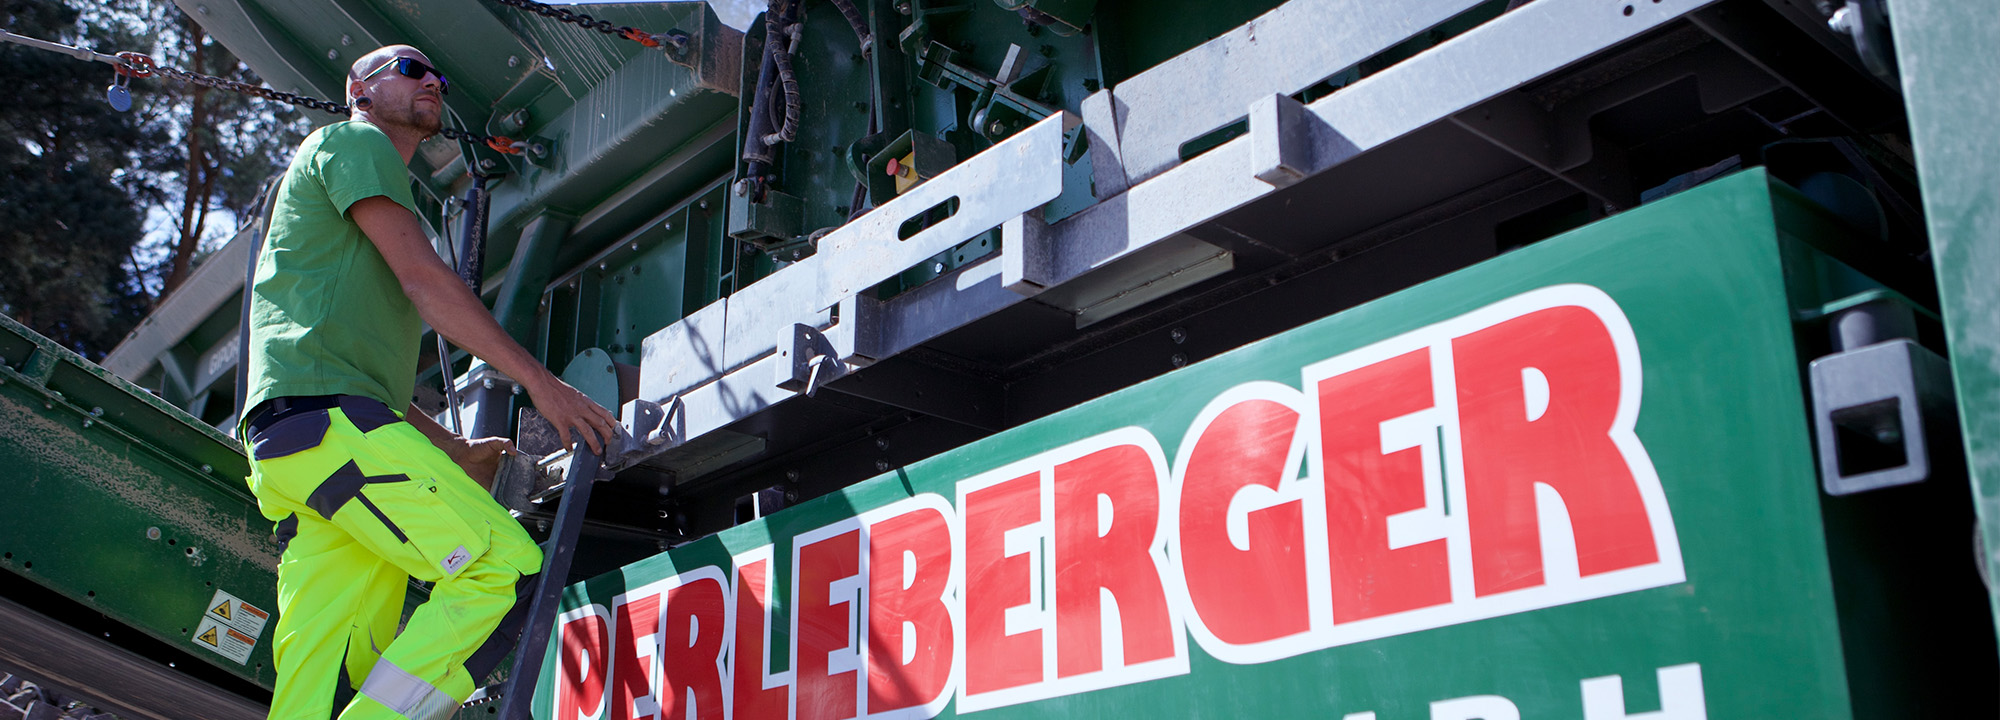 Perleberger Recycling GmbH